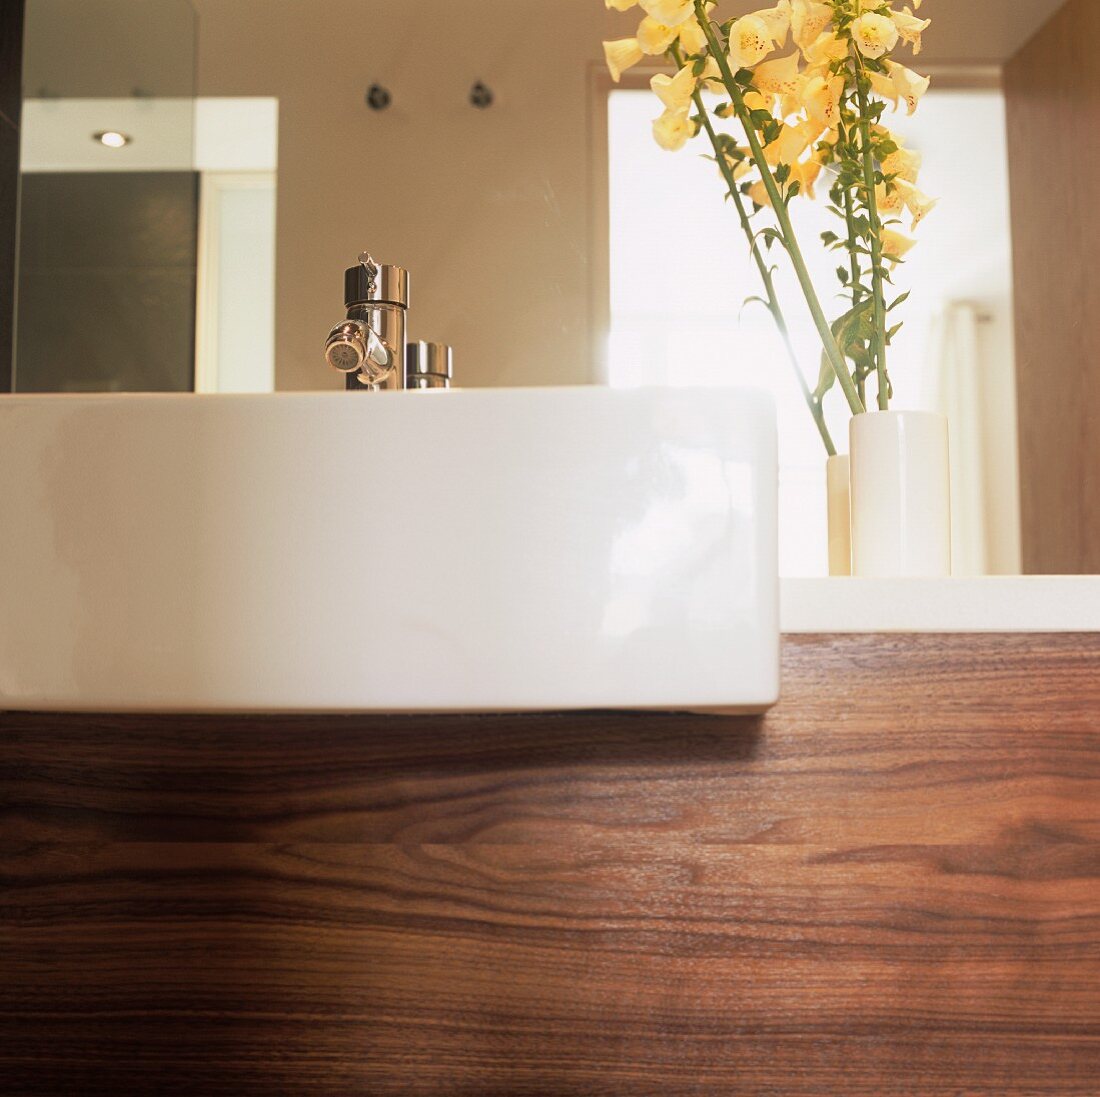 A modern white wash basin and walnut panelling